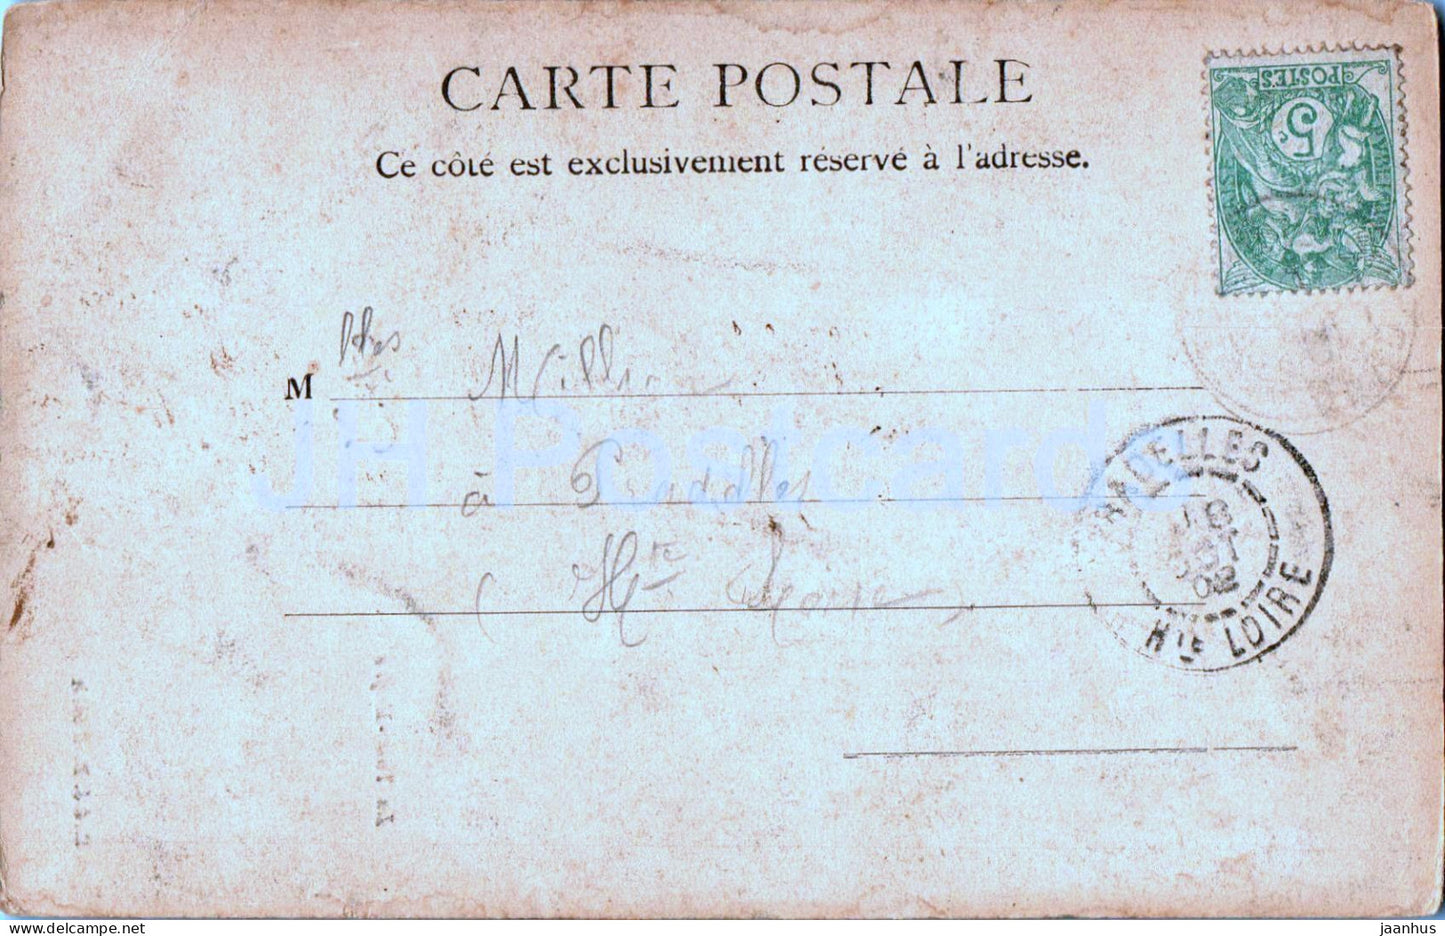 Nimes - La tour Magne - ancient world - 10444 - old postcard - 1902 - France - used